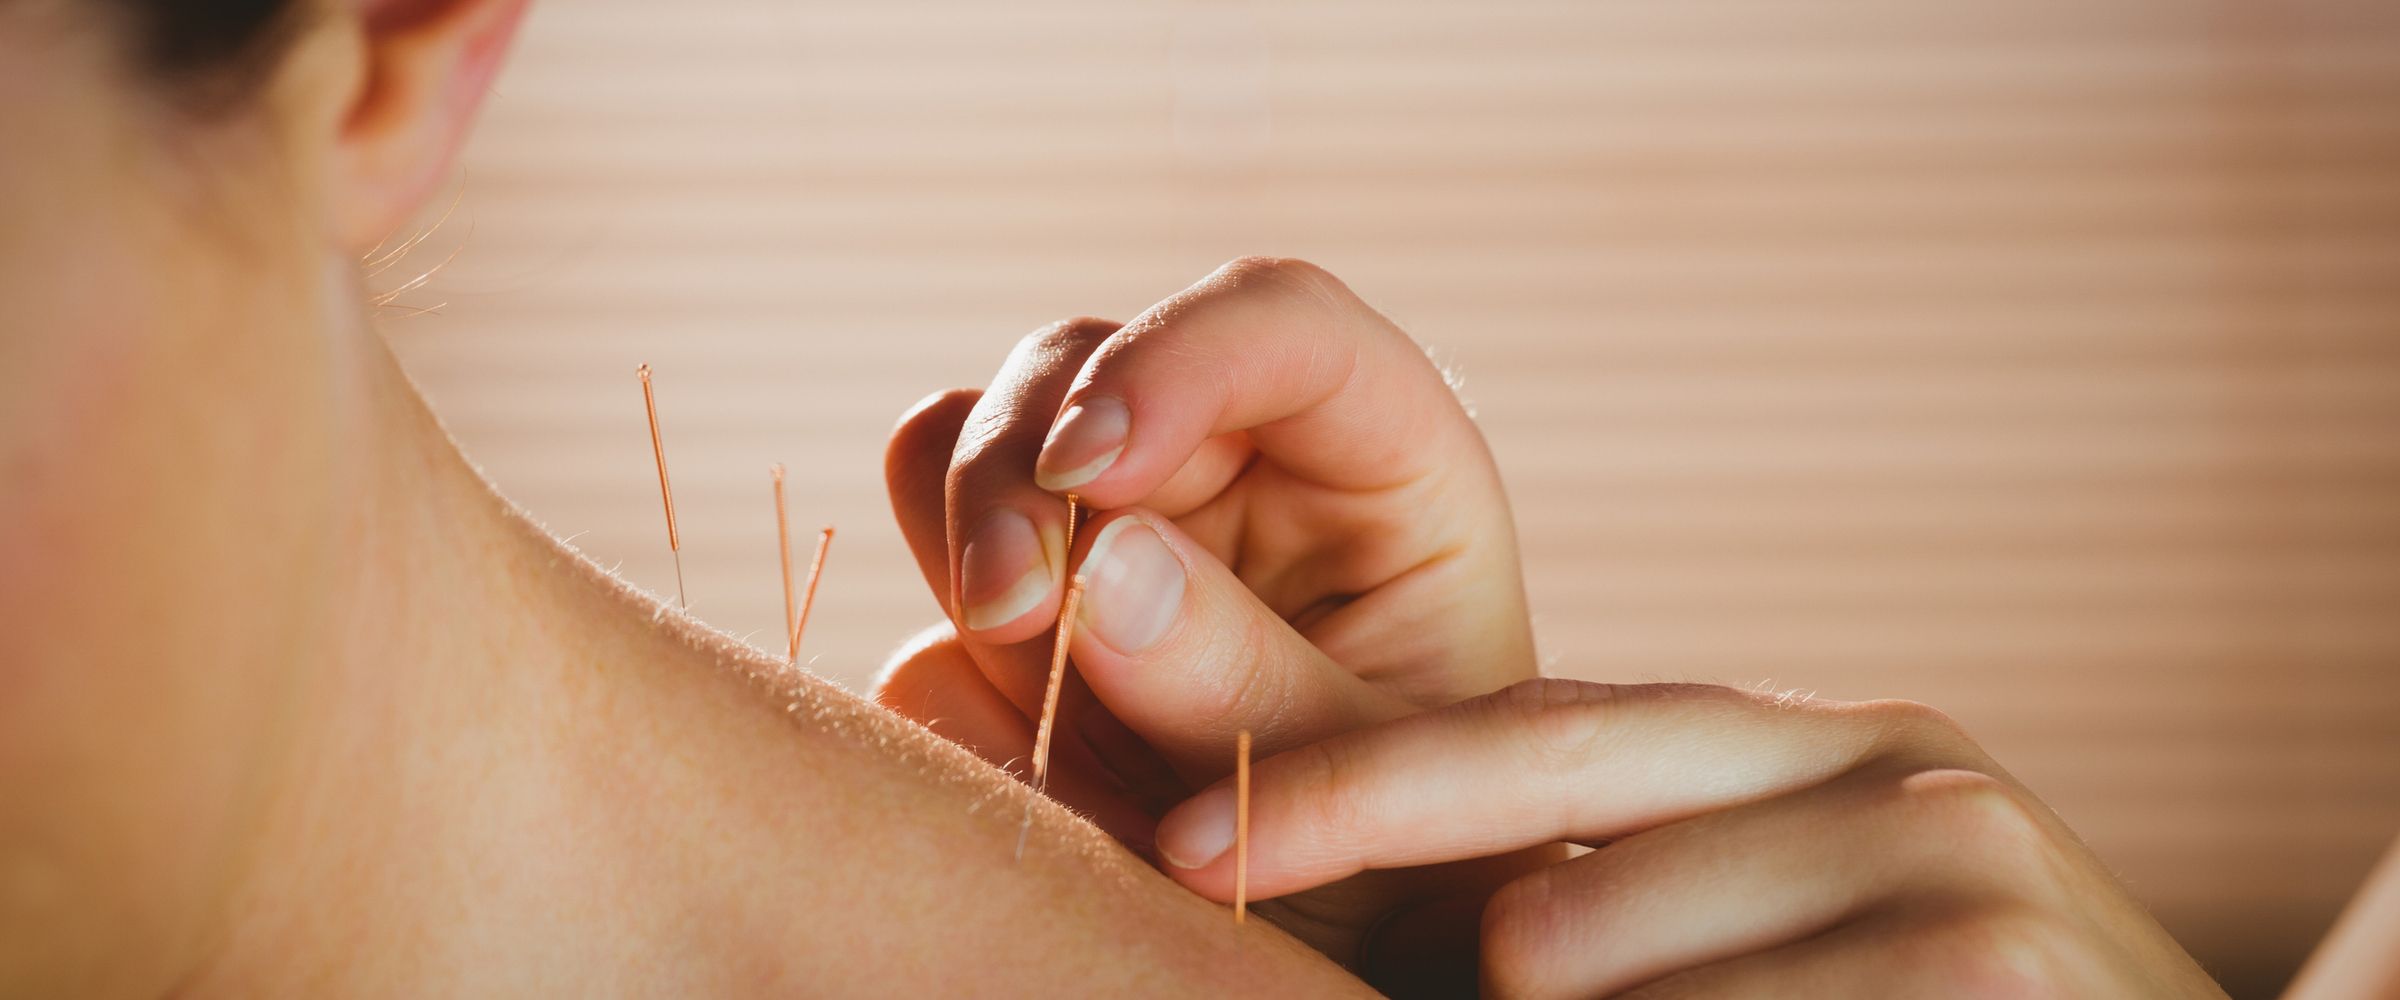 Akupunkturnadeln stecken in der Haut